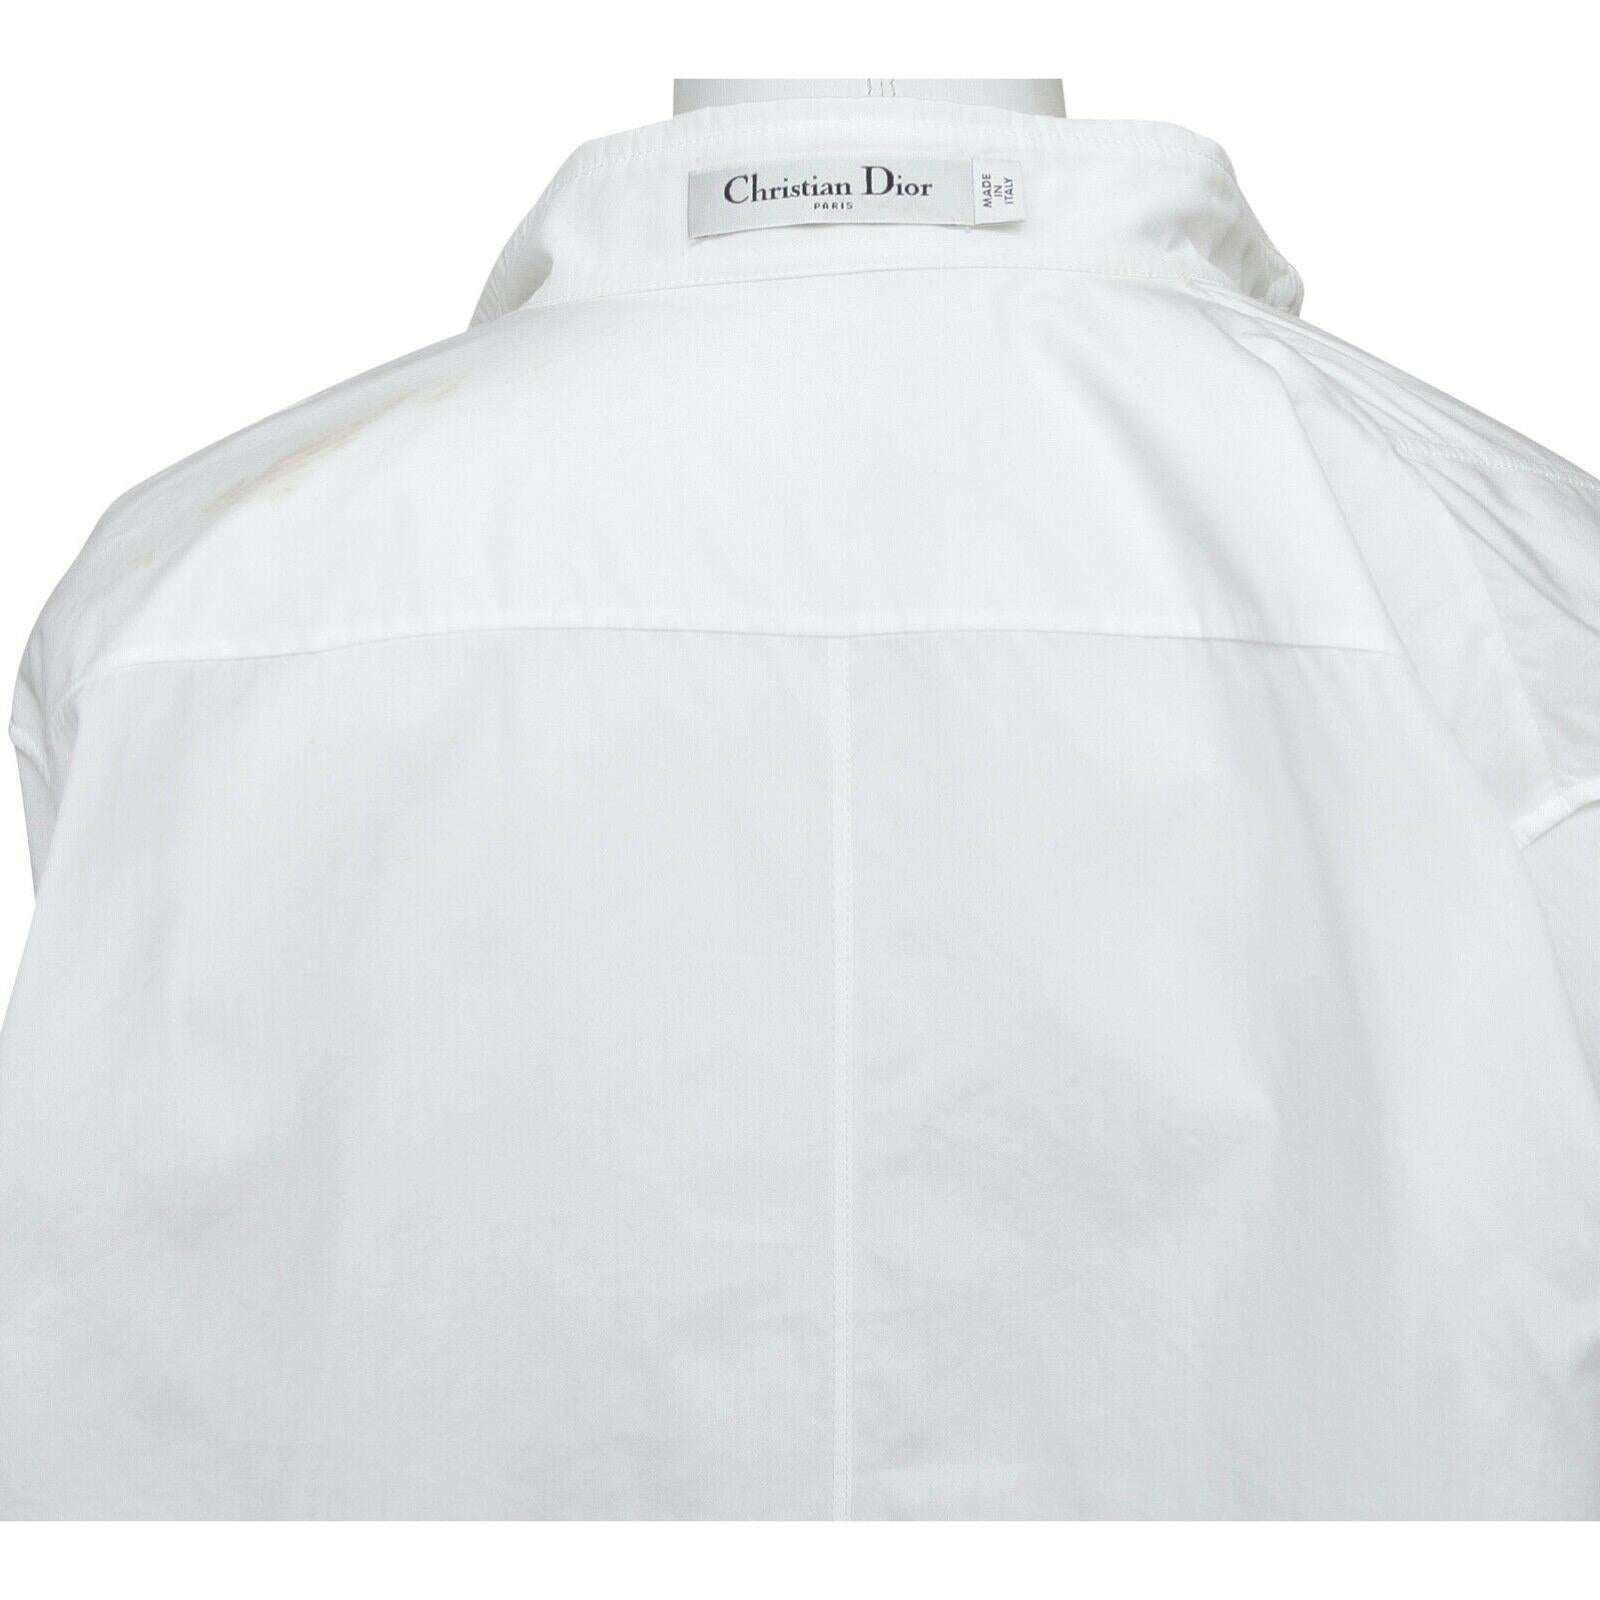 Gray DIOR White Button Down Blouse Shirt Top Cotton Long Sleeve V-Neck Sz 36